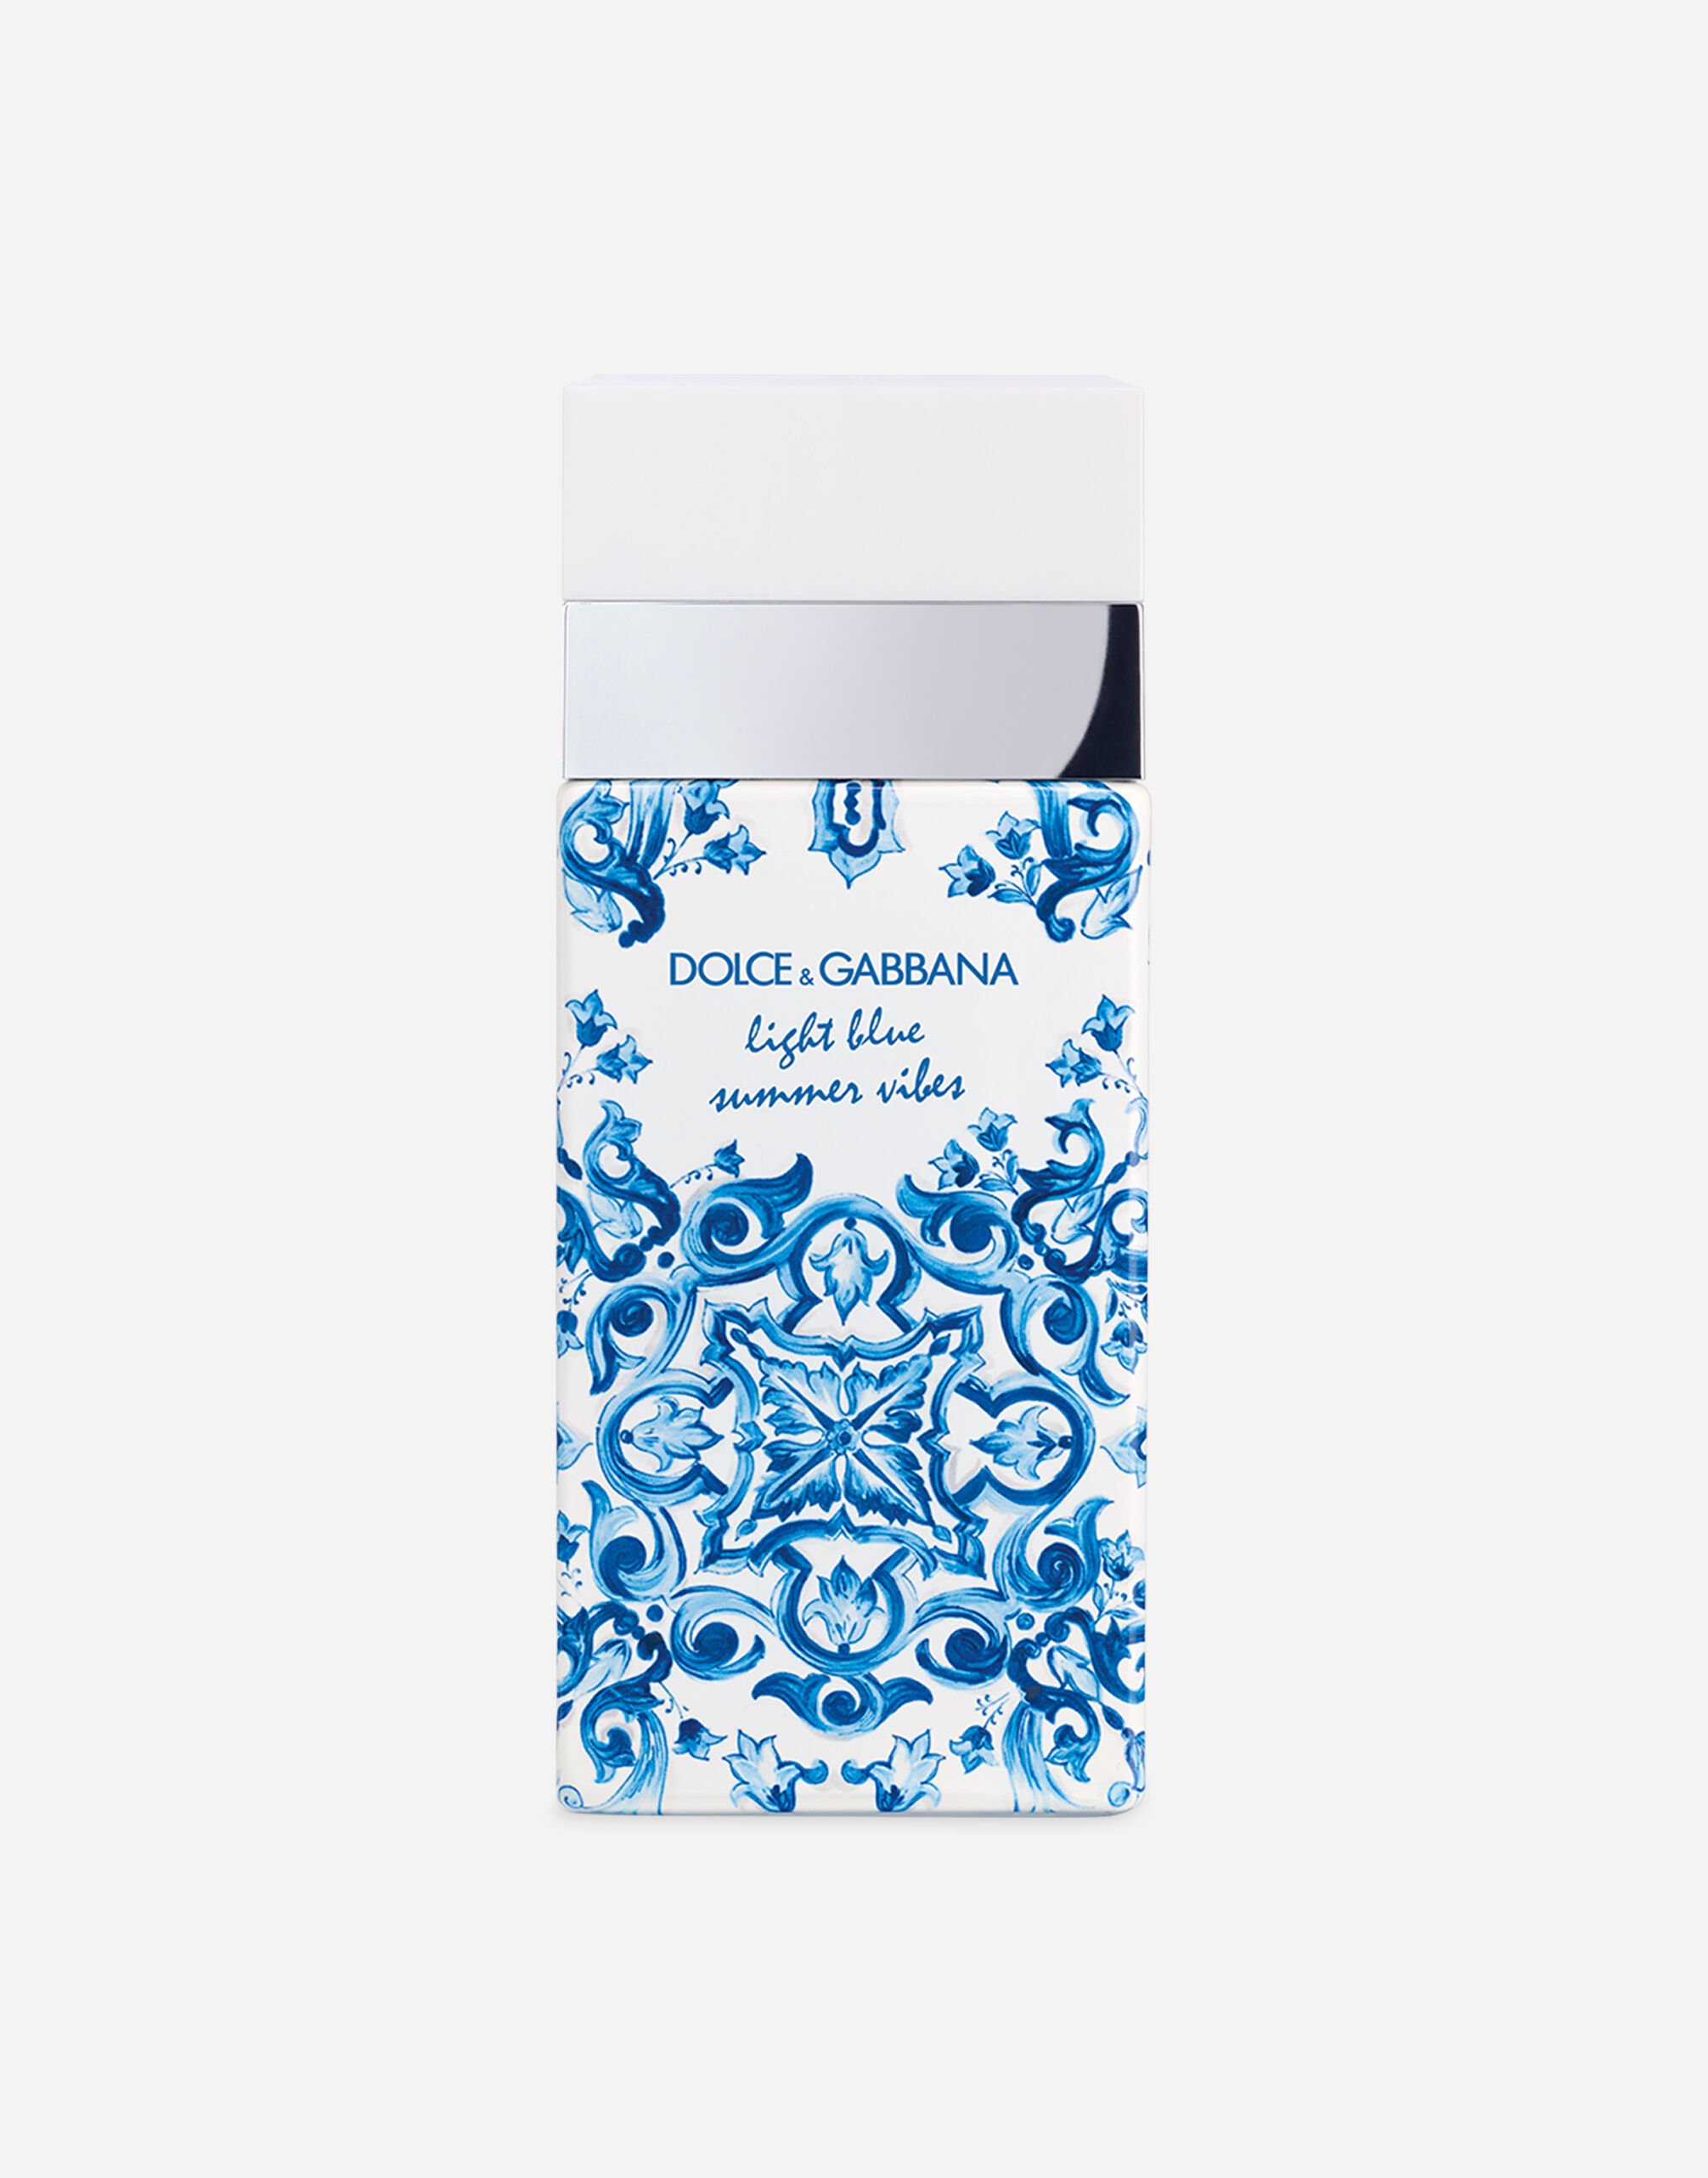 Dolce & Gabbana Light Blue Summer Vibes Eau de Toilette Blanco CK1563B5845